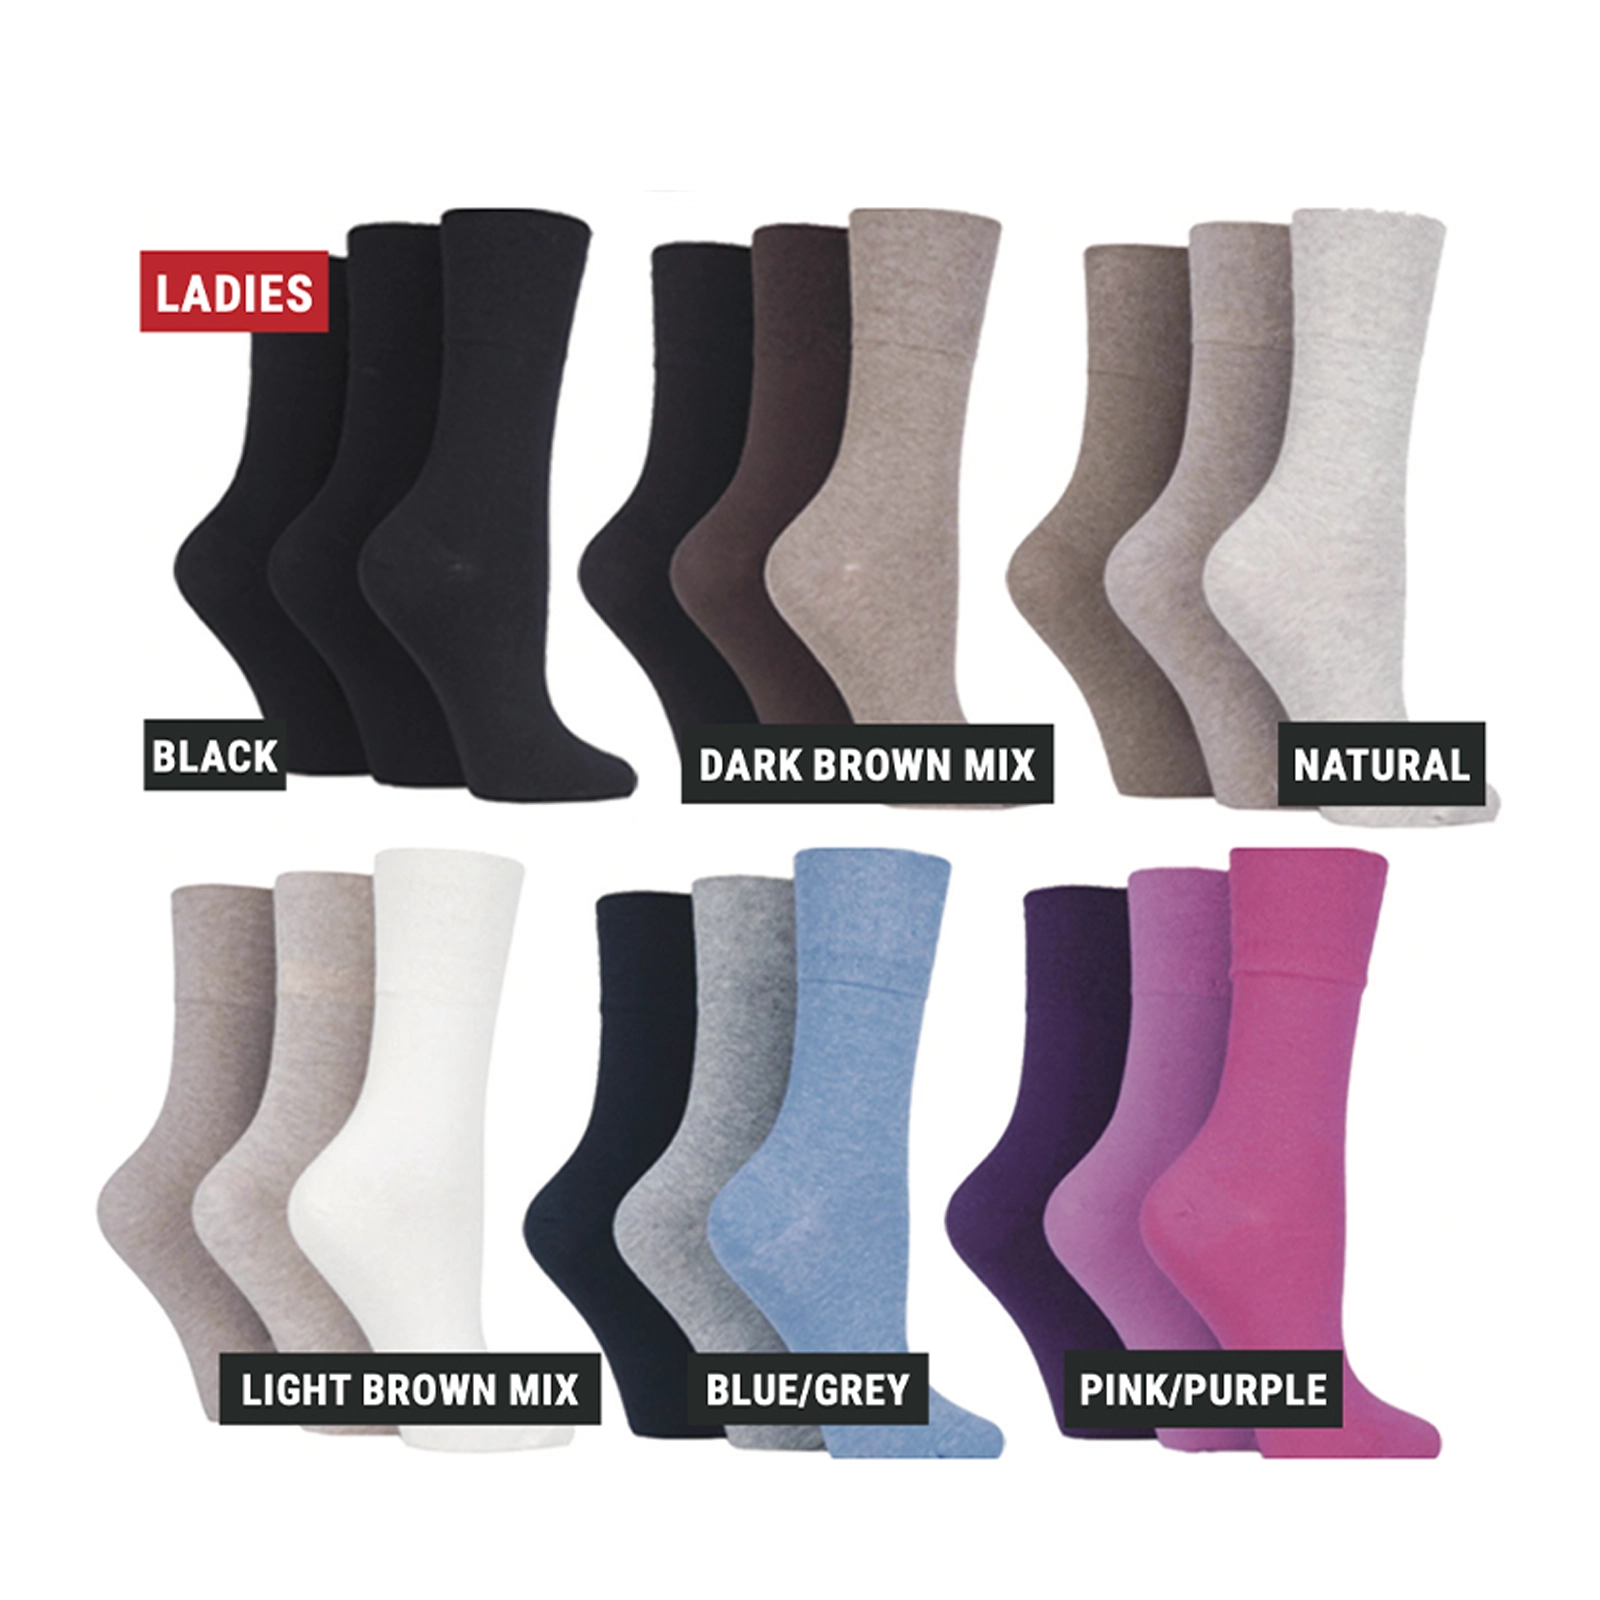 Assortment of women's Gentle Grip Diabetic Socks in multiple shades.